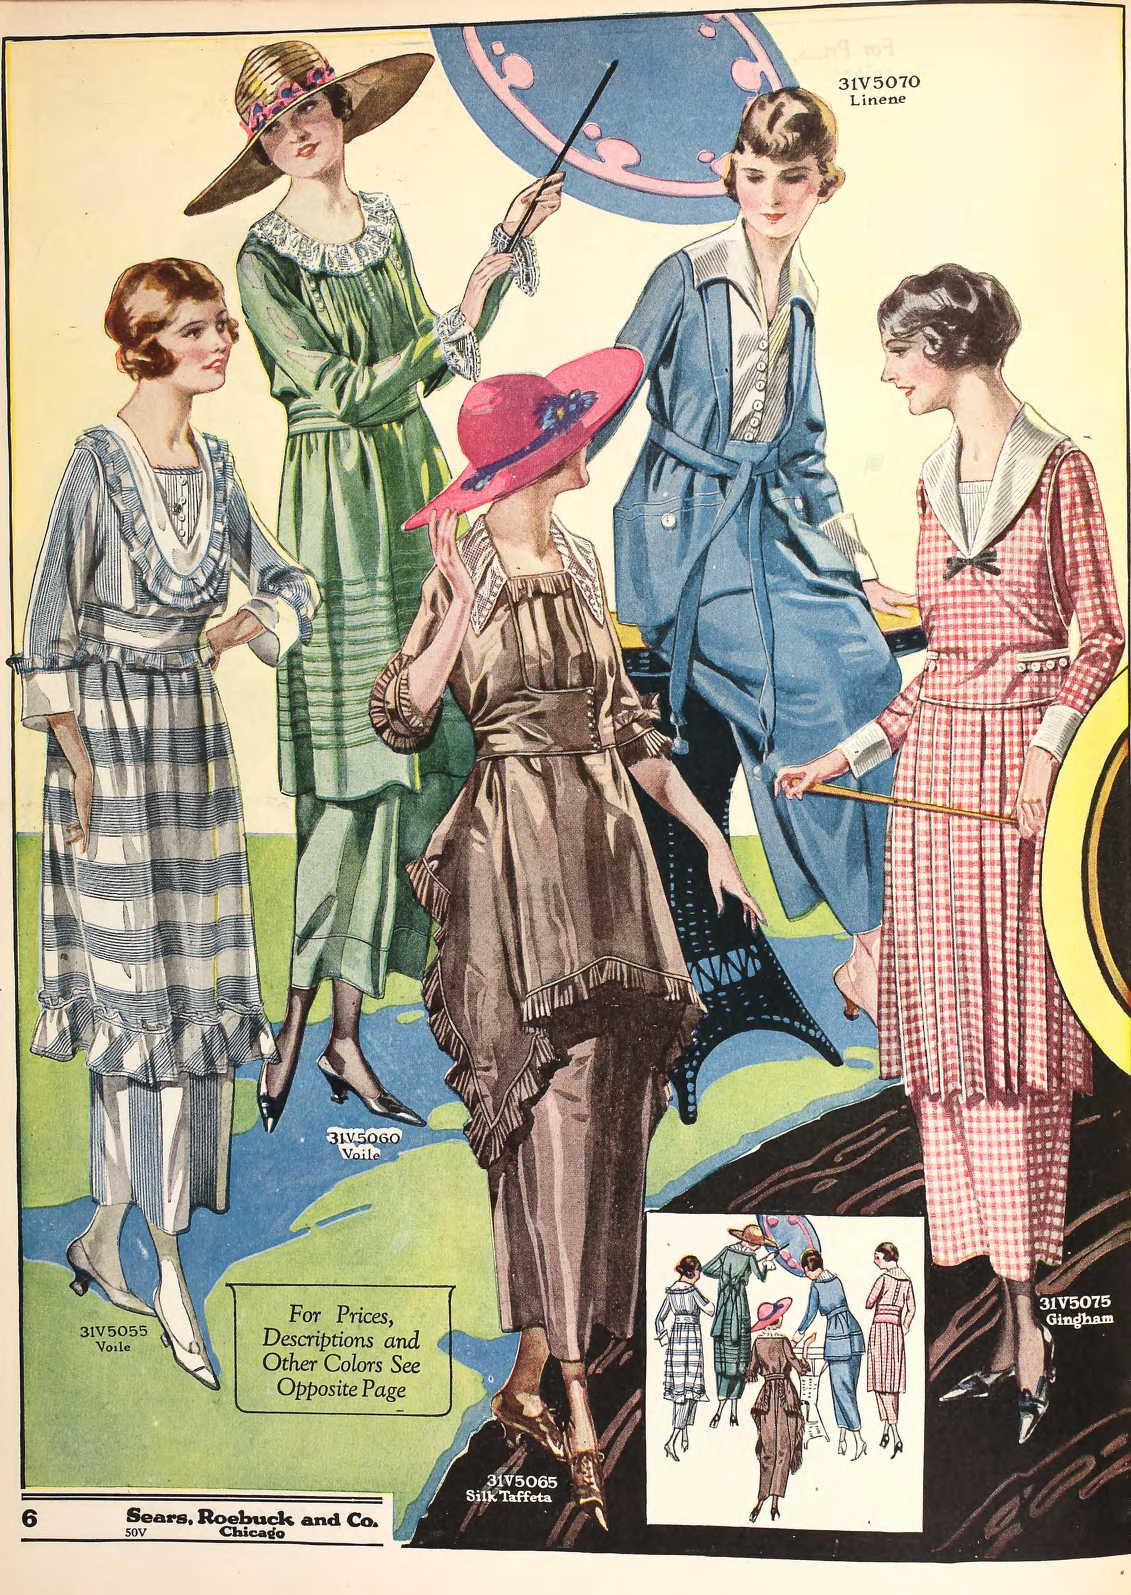 1920s 1920年代sears时装目录精选图片集 vintage复古饰品古董衣